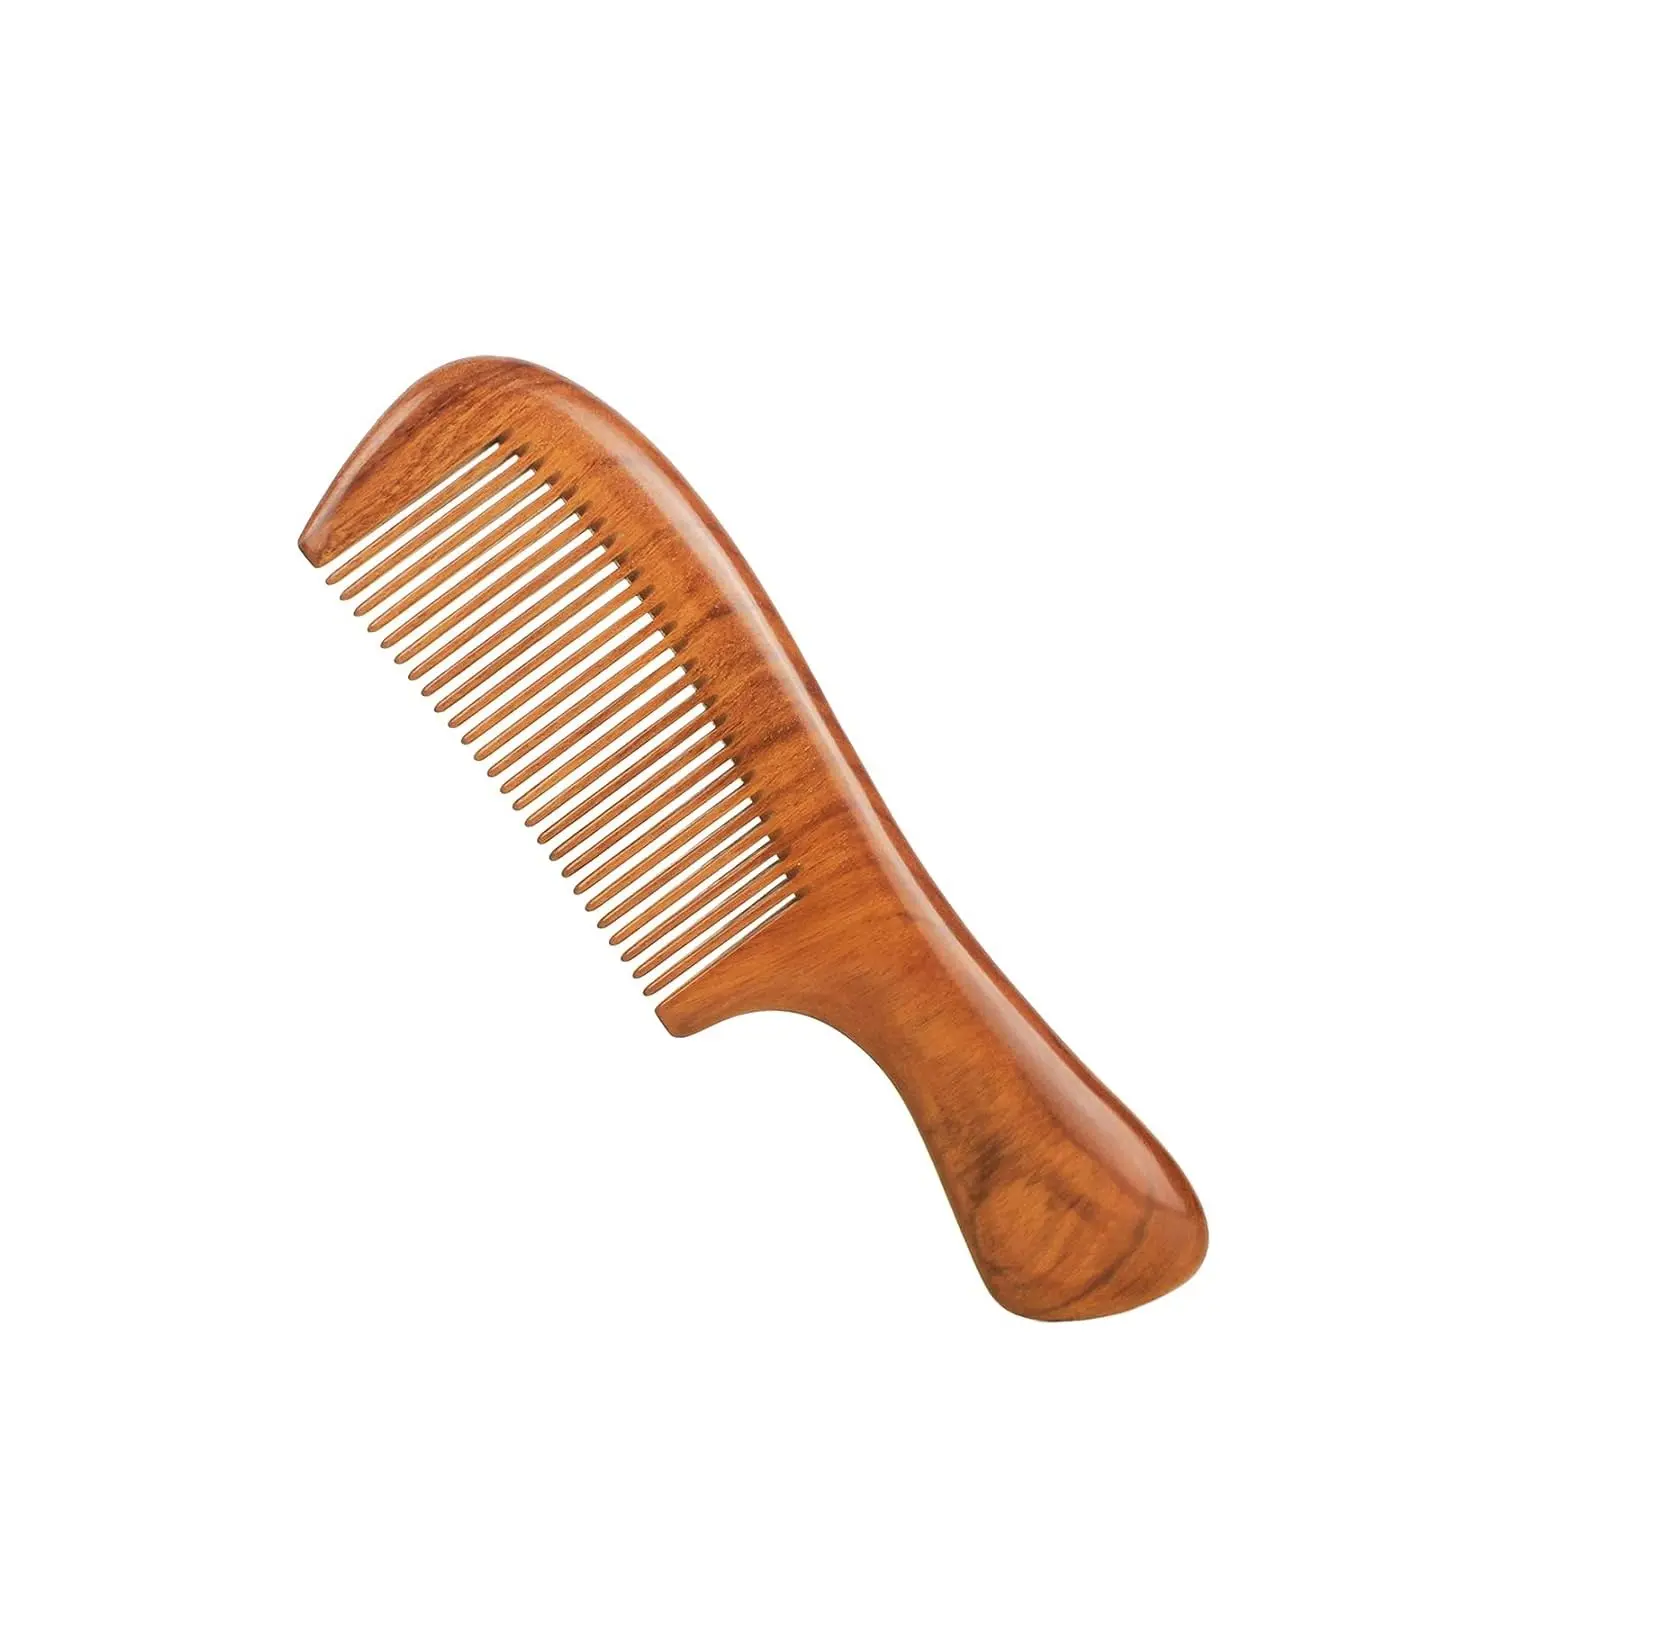 Eksportir India sisir rambut kayu pasokan terbaik untuk pria sisir kayu kualitas terbaik sisir Logo kustom produsen grosir